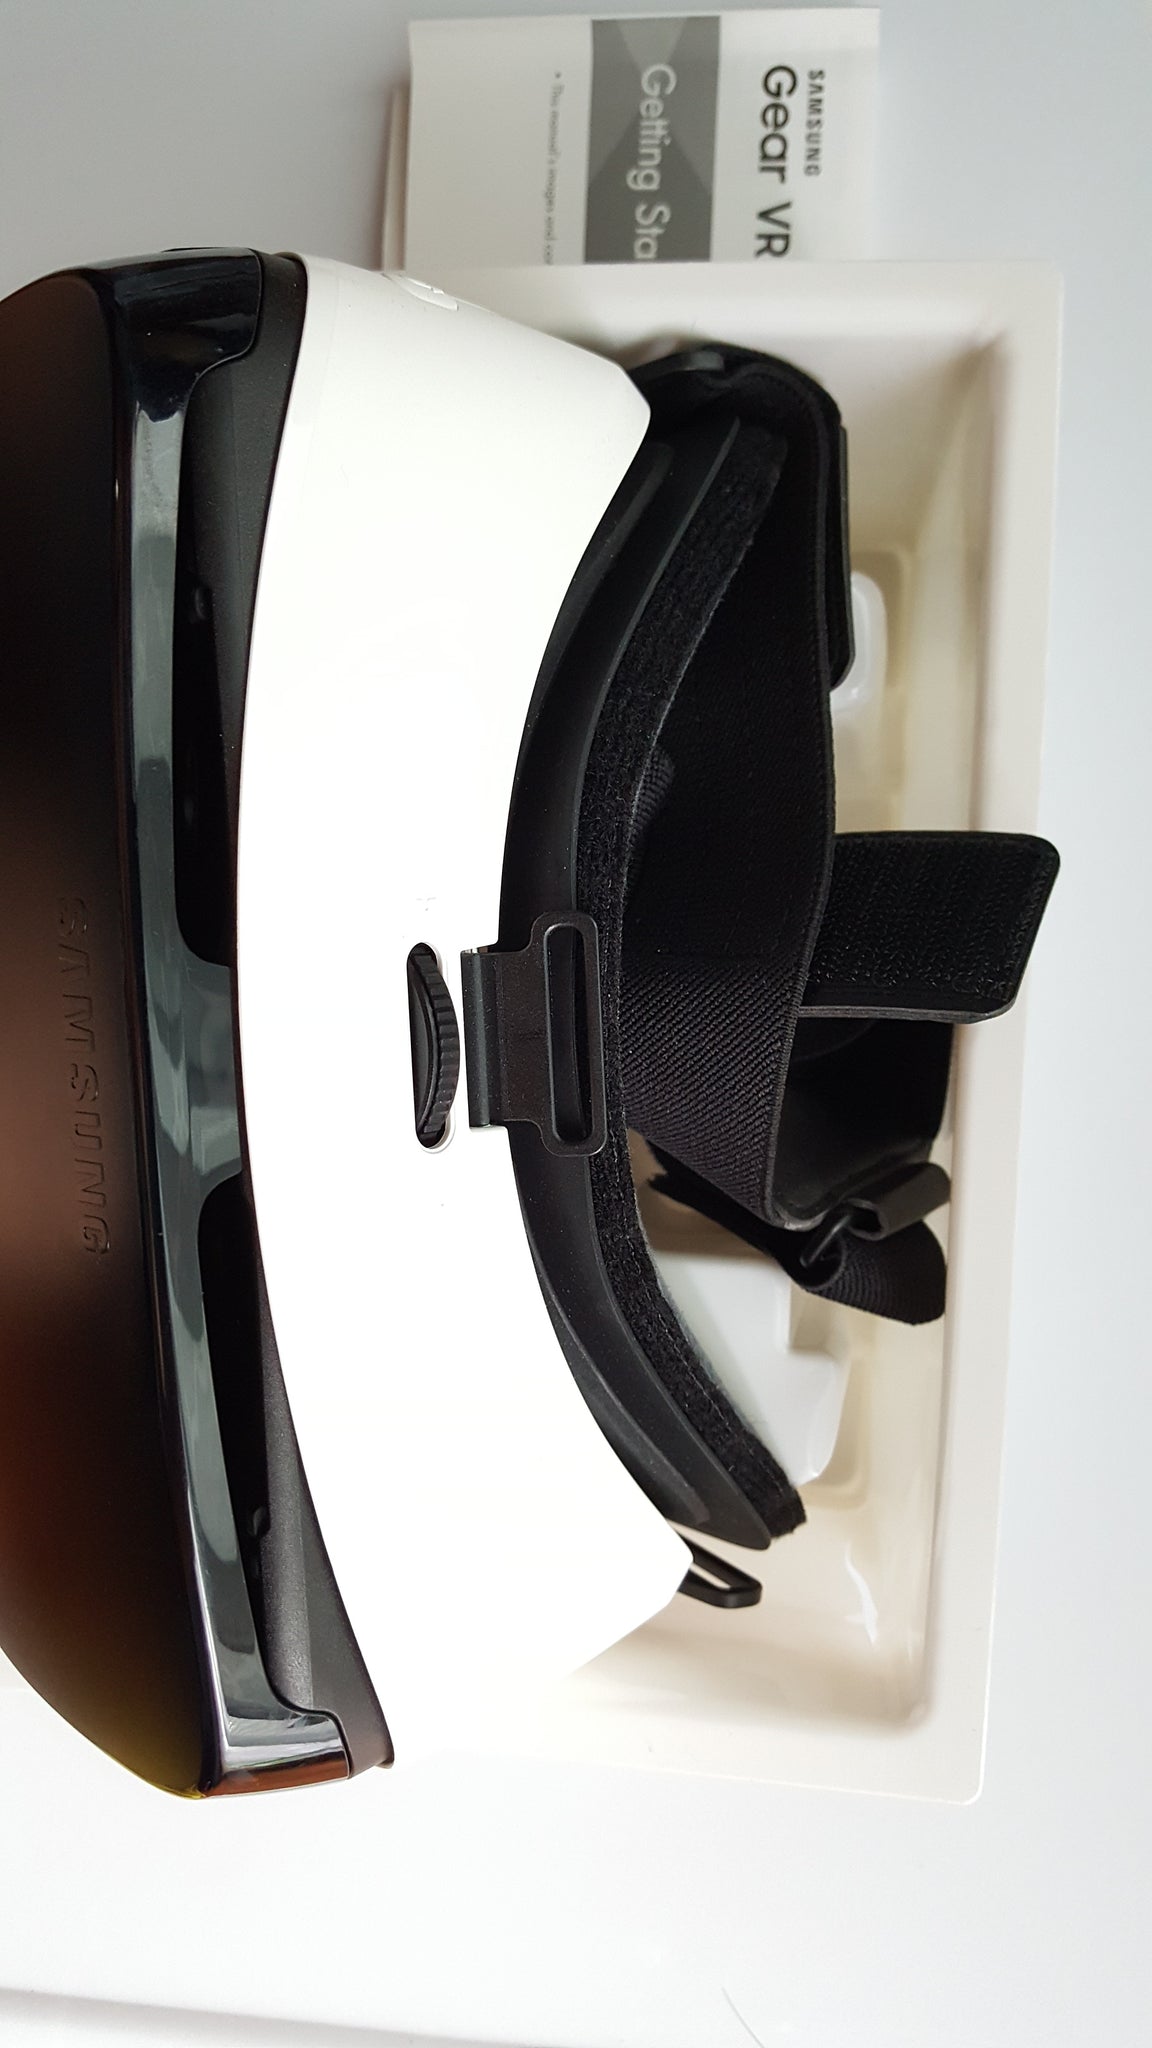 Samsung Gear VR 2016 For Samsung Galaxy S6 S7 Edge, N – KenDoTronics